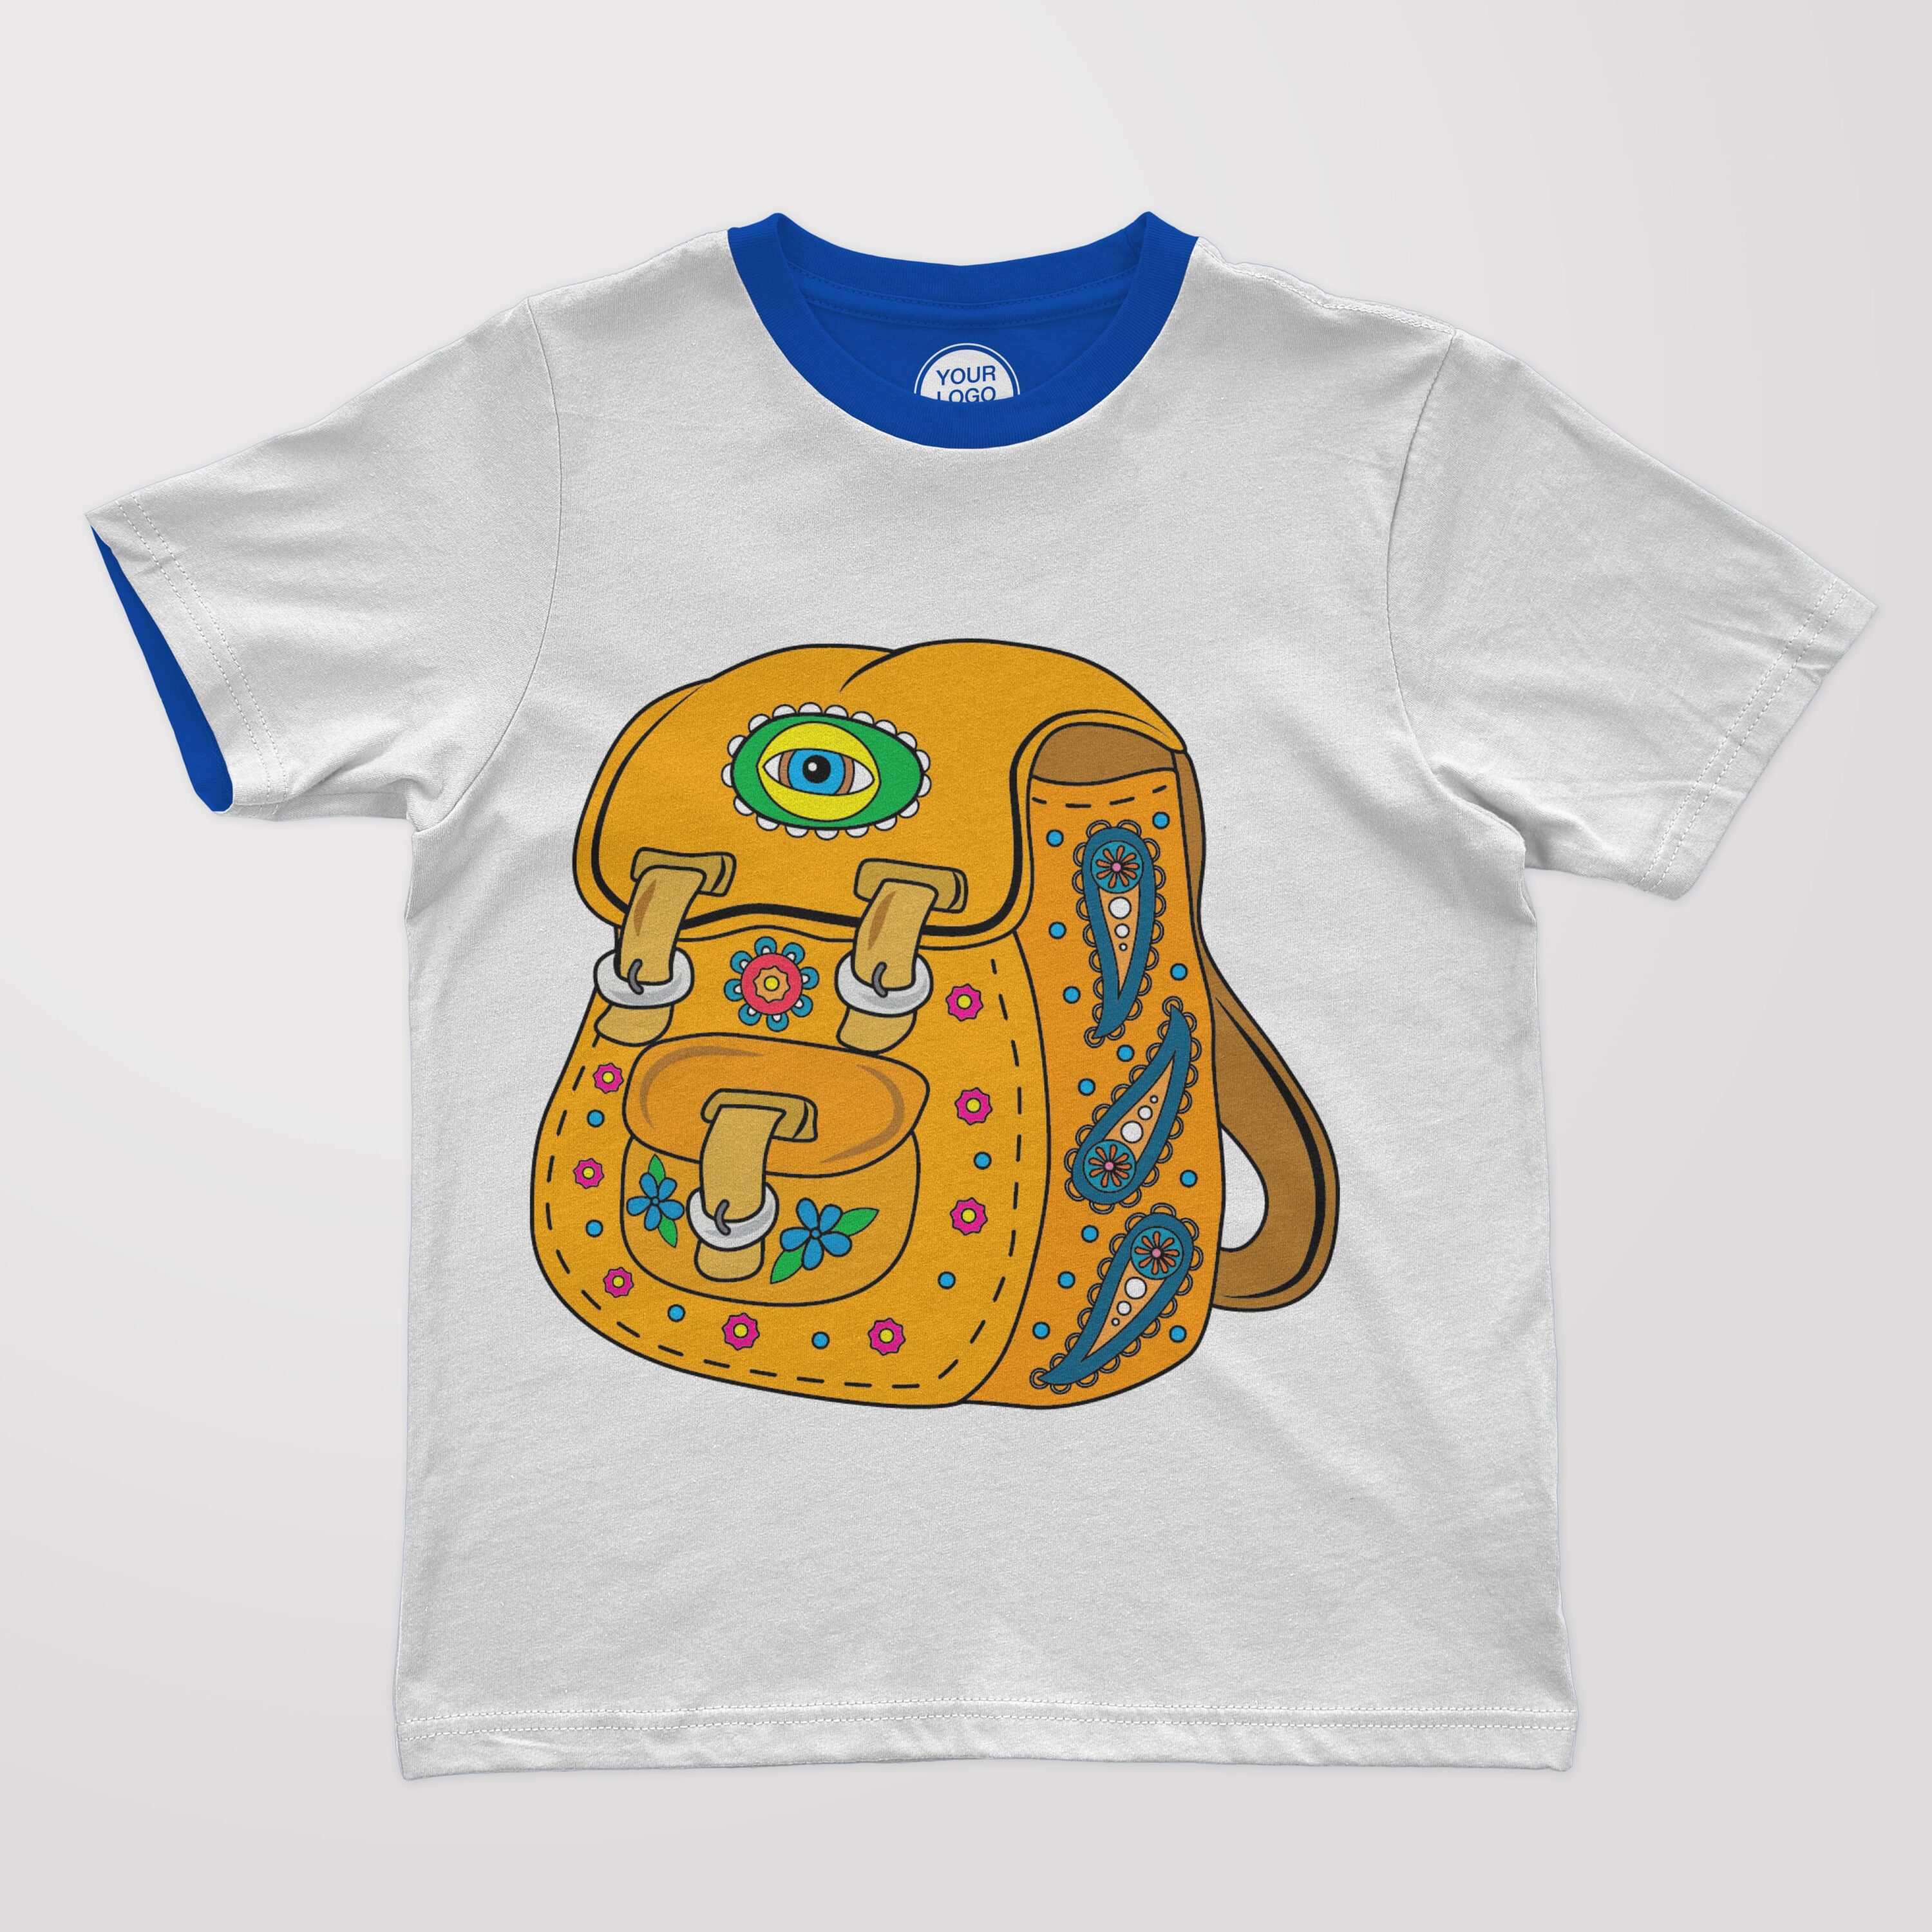 T-shirt design with printed ornamental hippie bag.